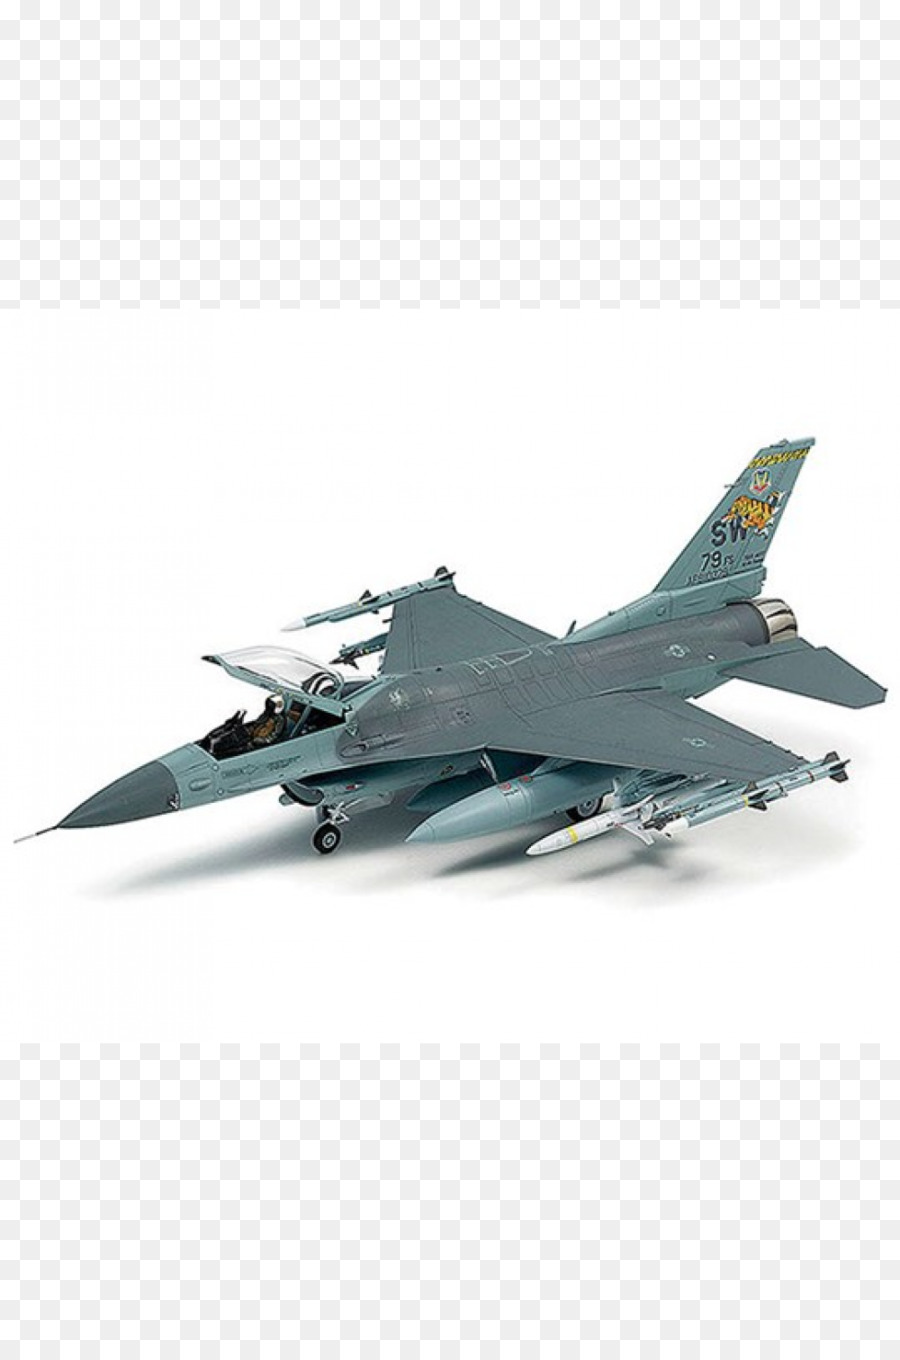 General Dynamics F-16 Fighting Falcon Kunststoff-Modell Flugzeuge Lockheed Martin F-22 Raptor 1:48 scale - Flugzeuge